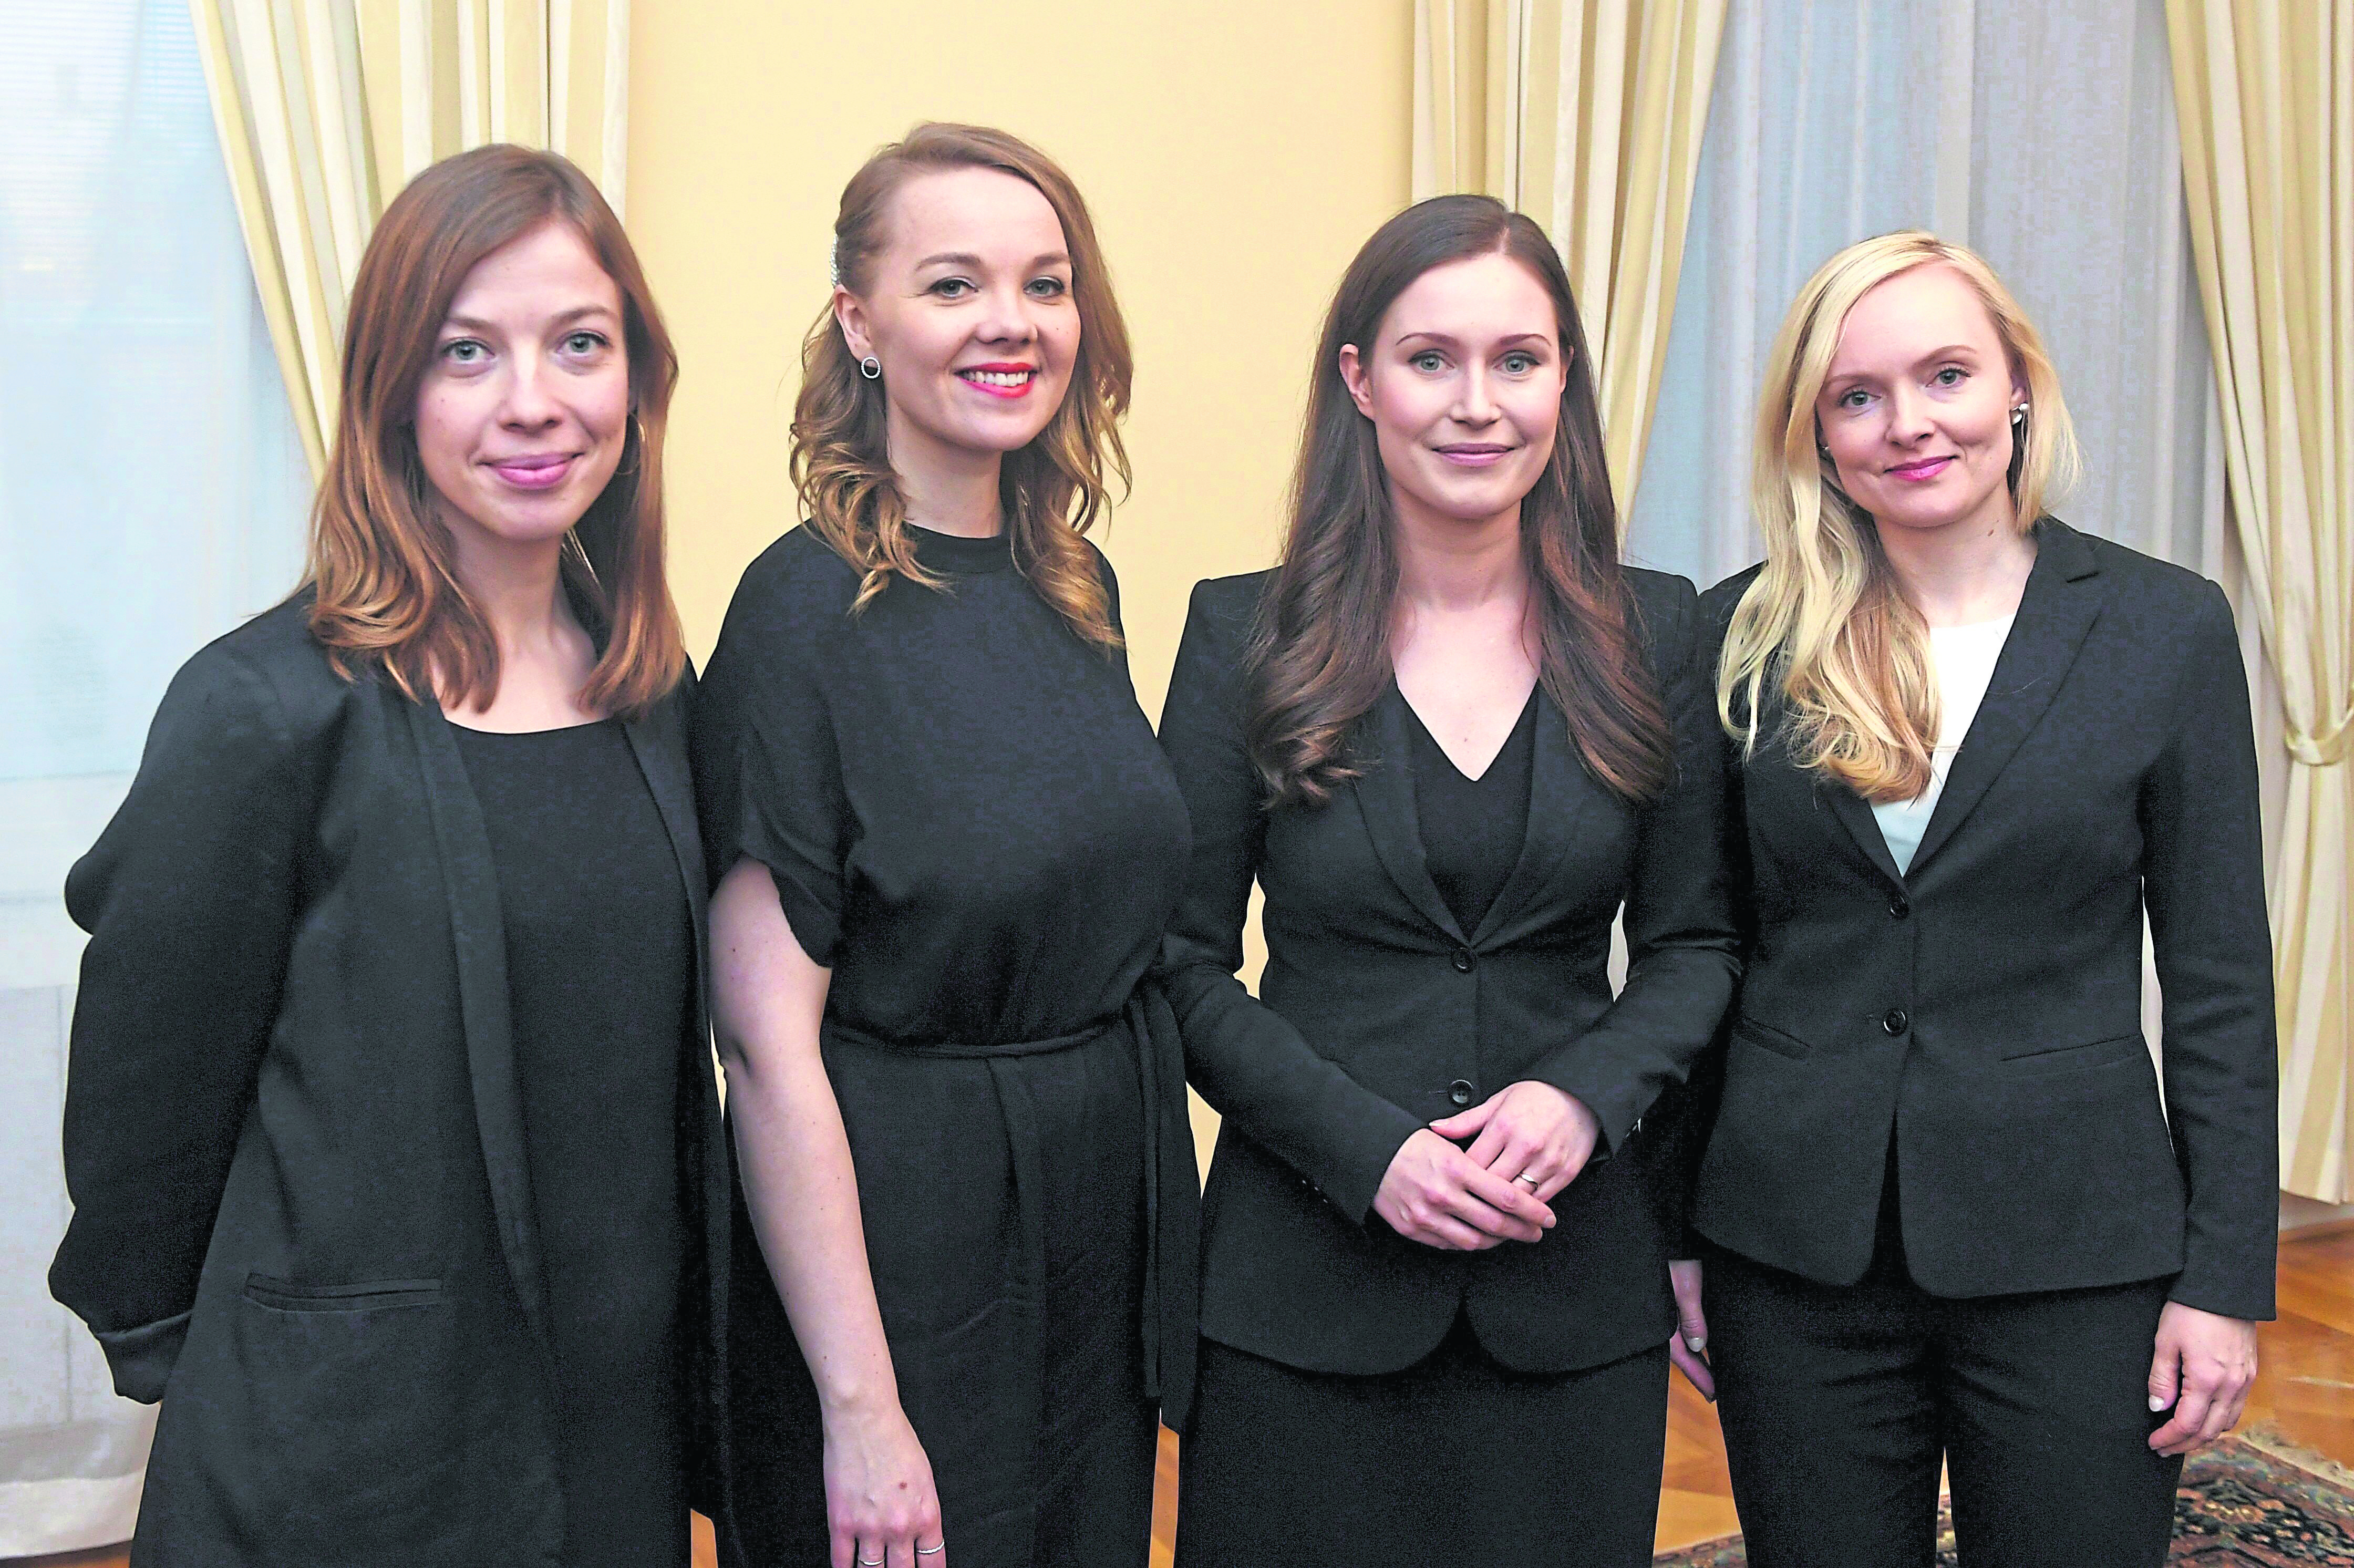 Left to right: Finnish education minister Li Andersson, finance minister Katri Kulmuni, PM Sanna Marin, and interior minister Maria Ohisalo